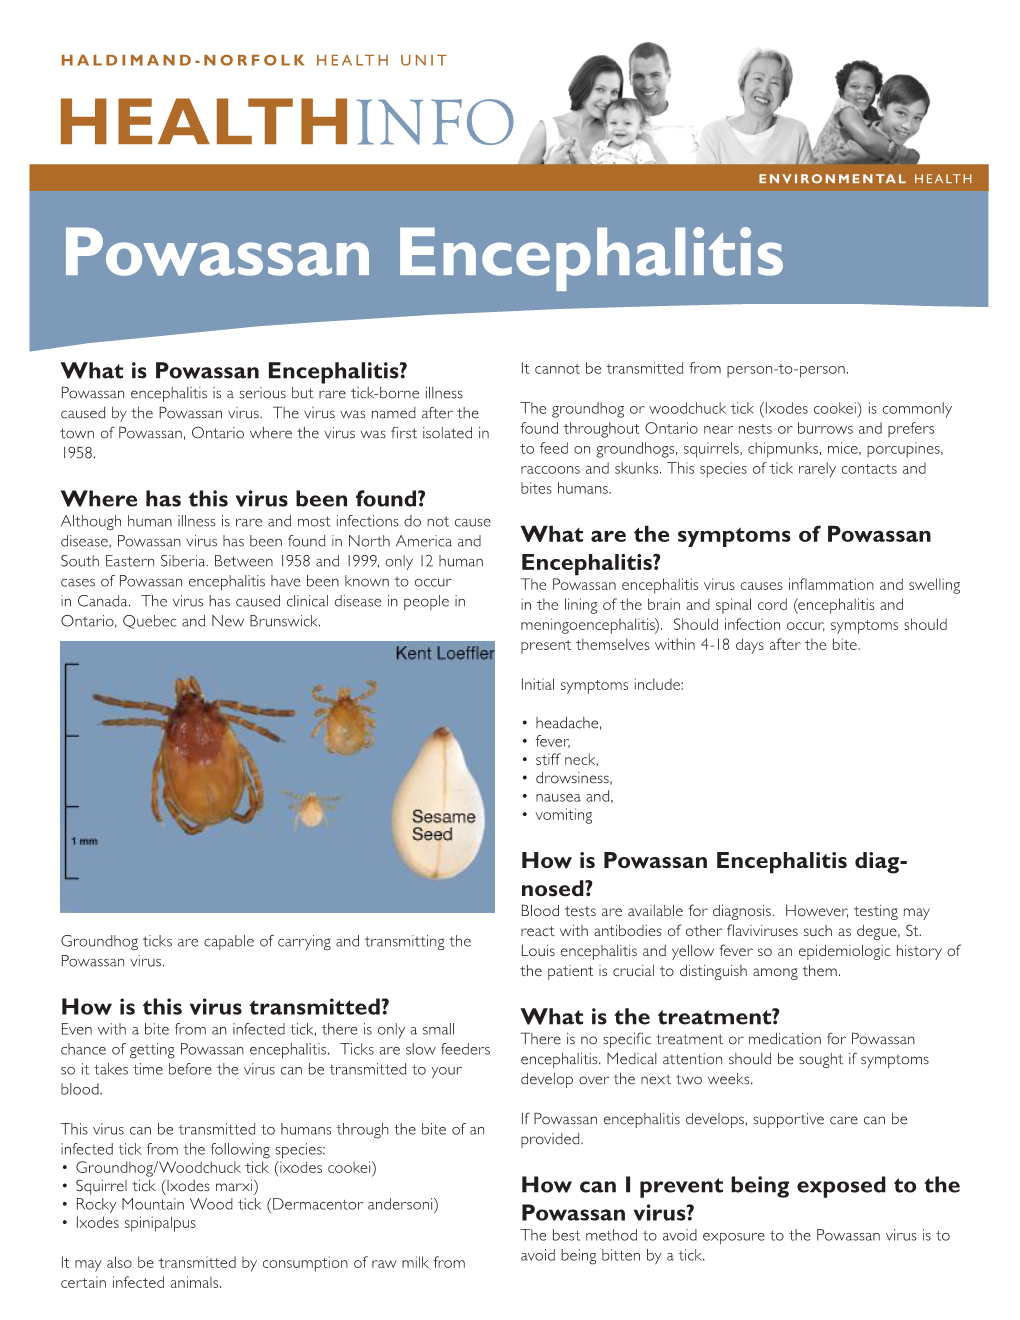 Powassan Encephalitis